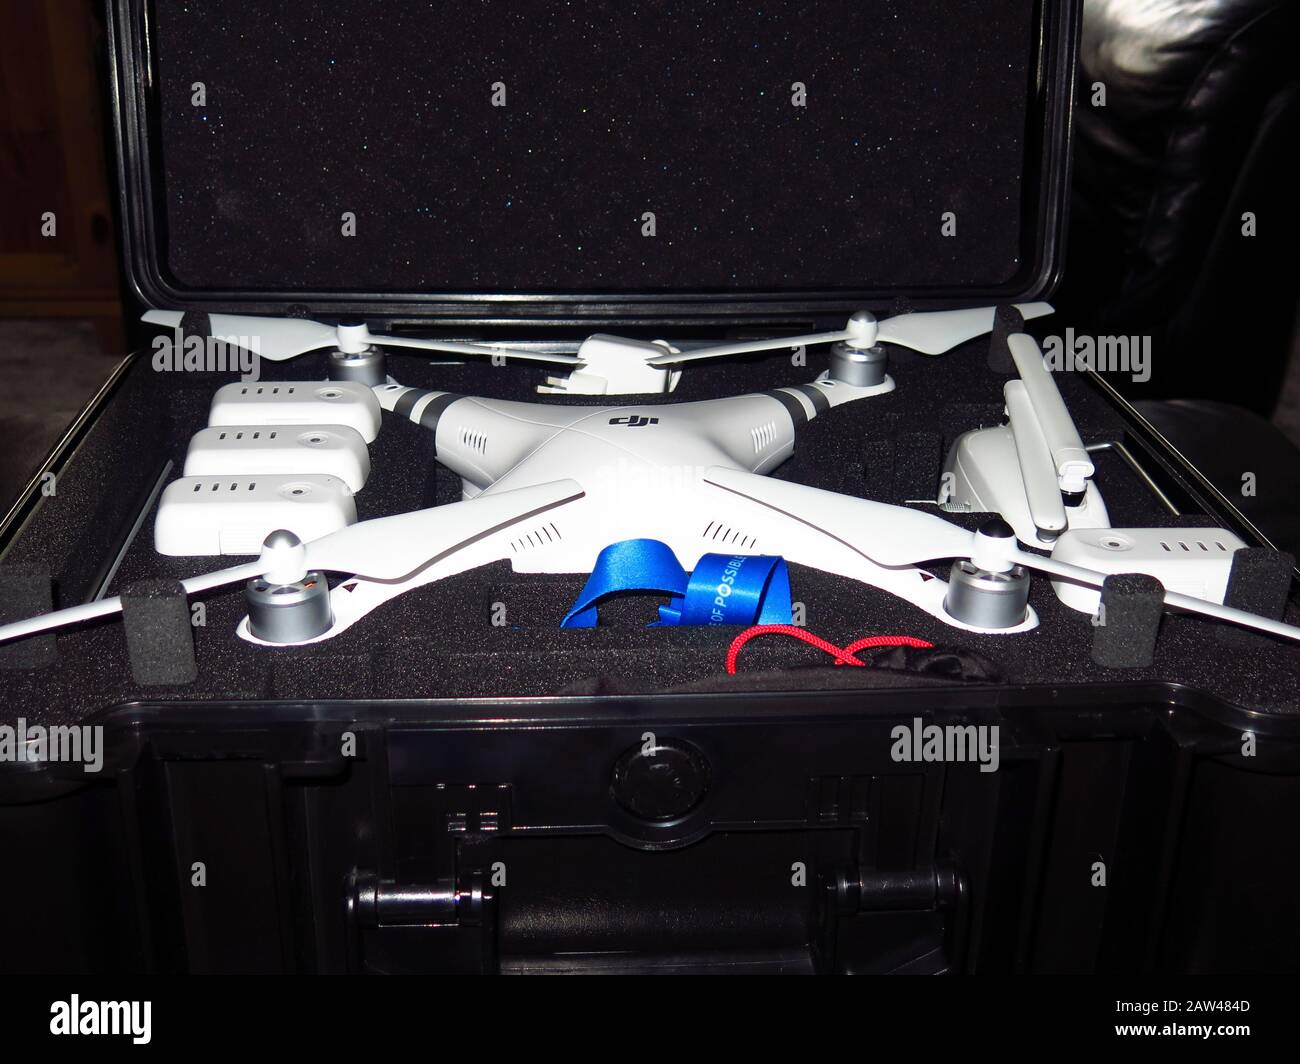 DJI Phantom 3 Advanced drone in flight case Stock Photo